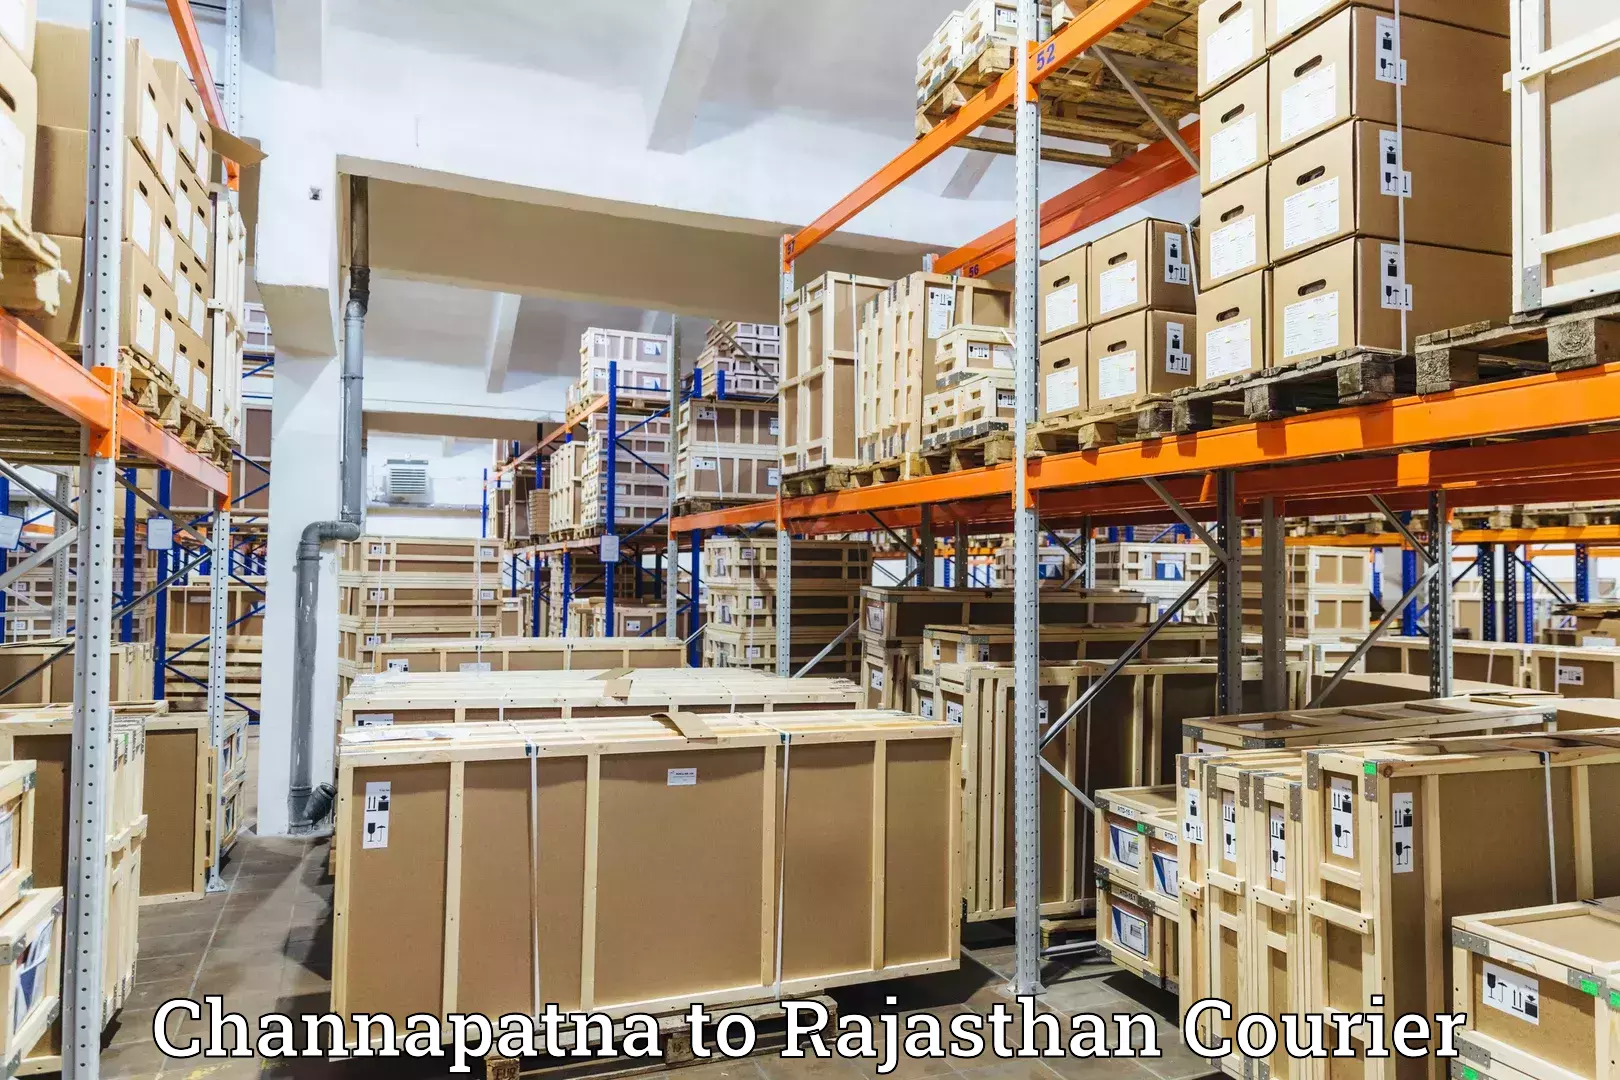 Express delivery capabilities Channapatna to Bhilwara